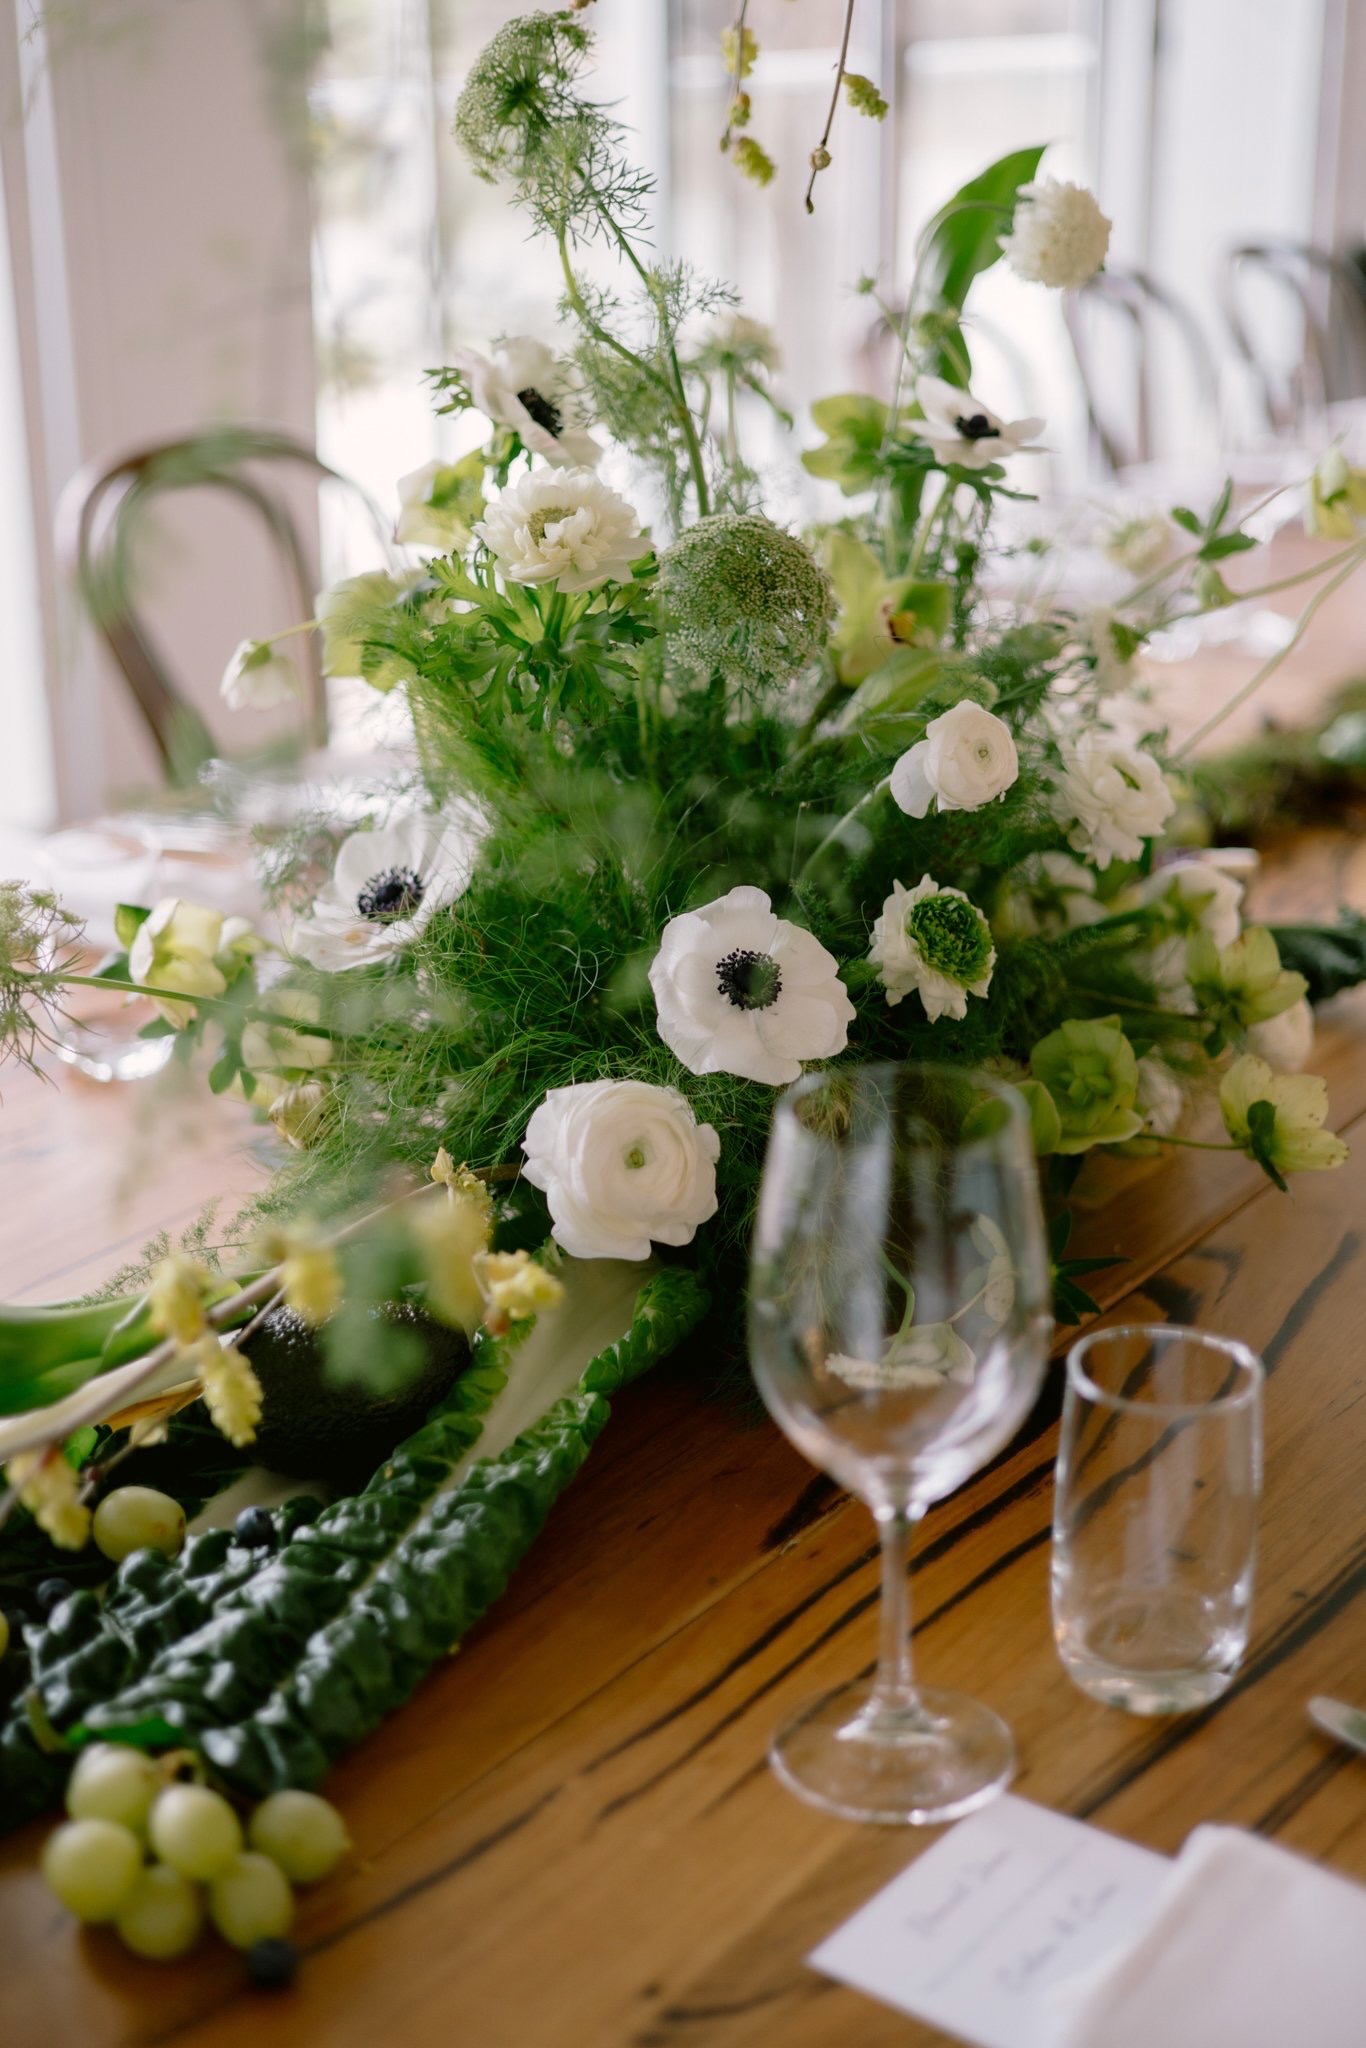 Cici – Daylesford Lake House Wedding